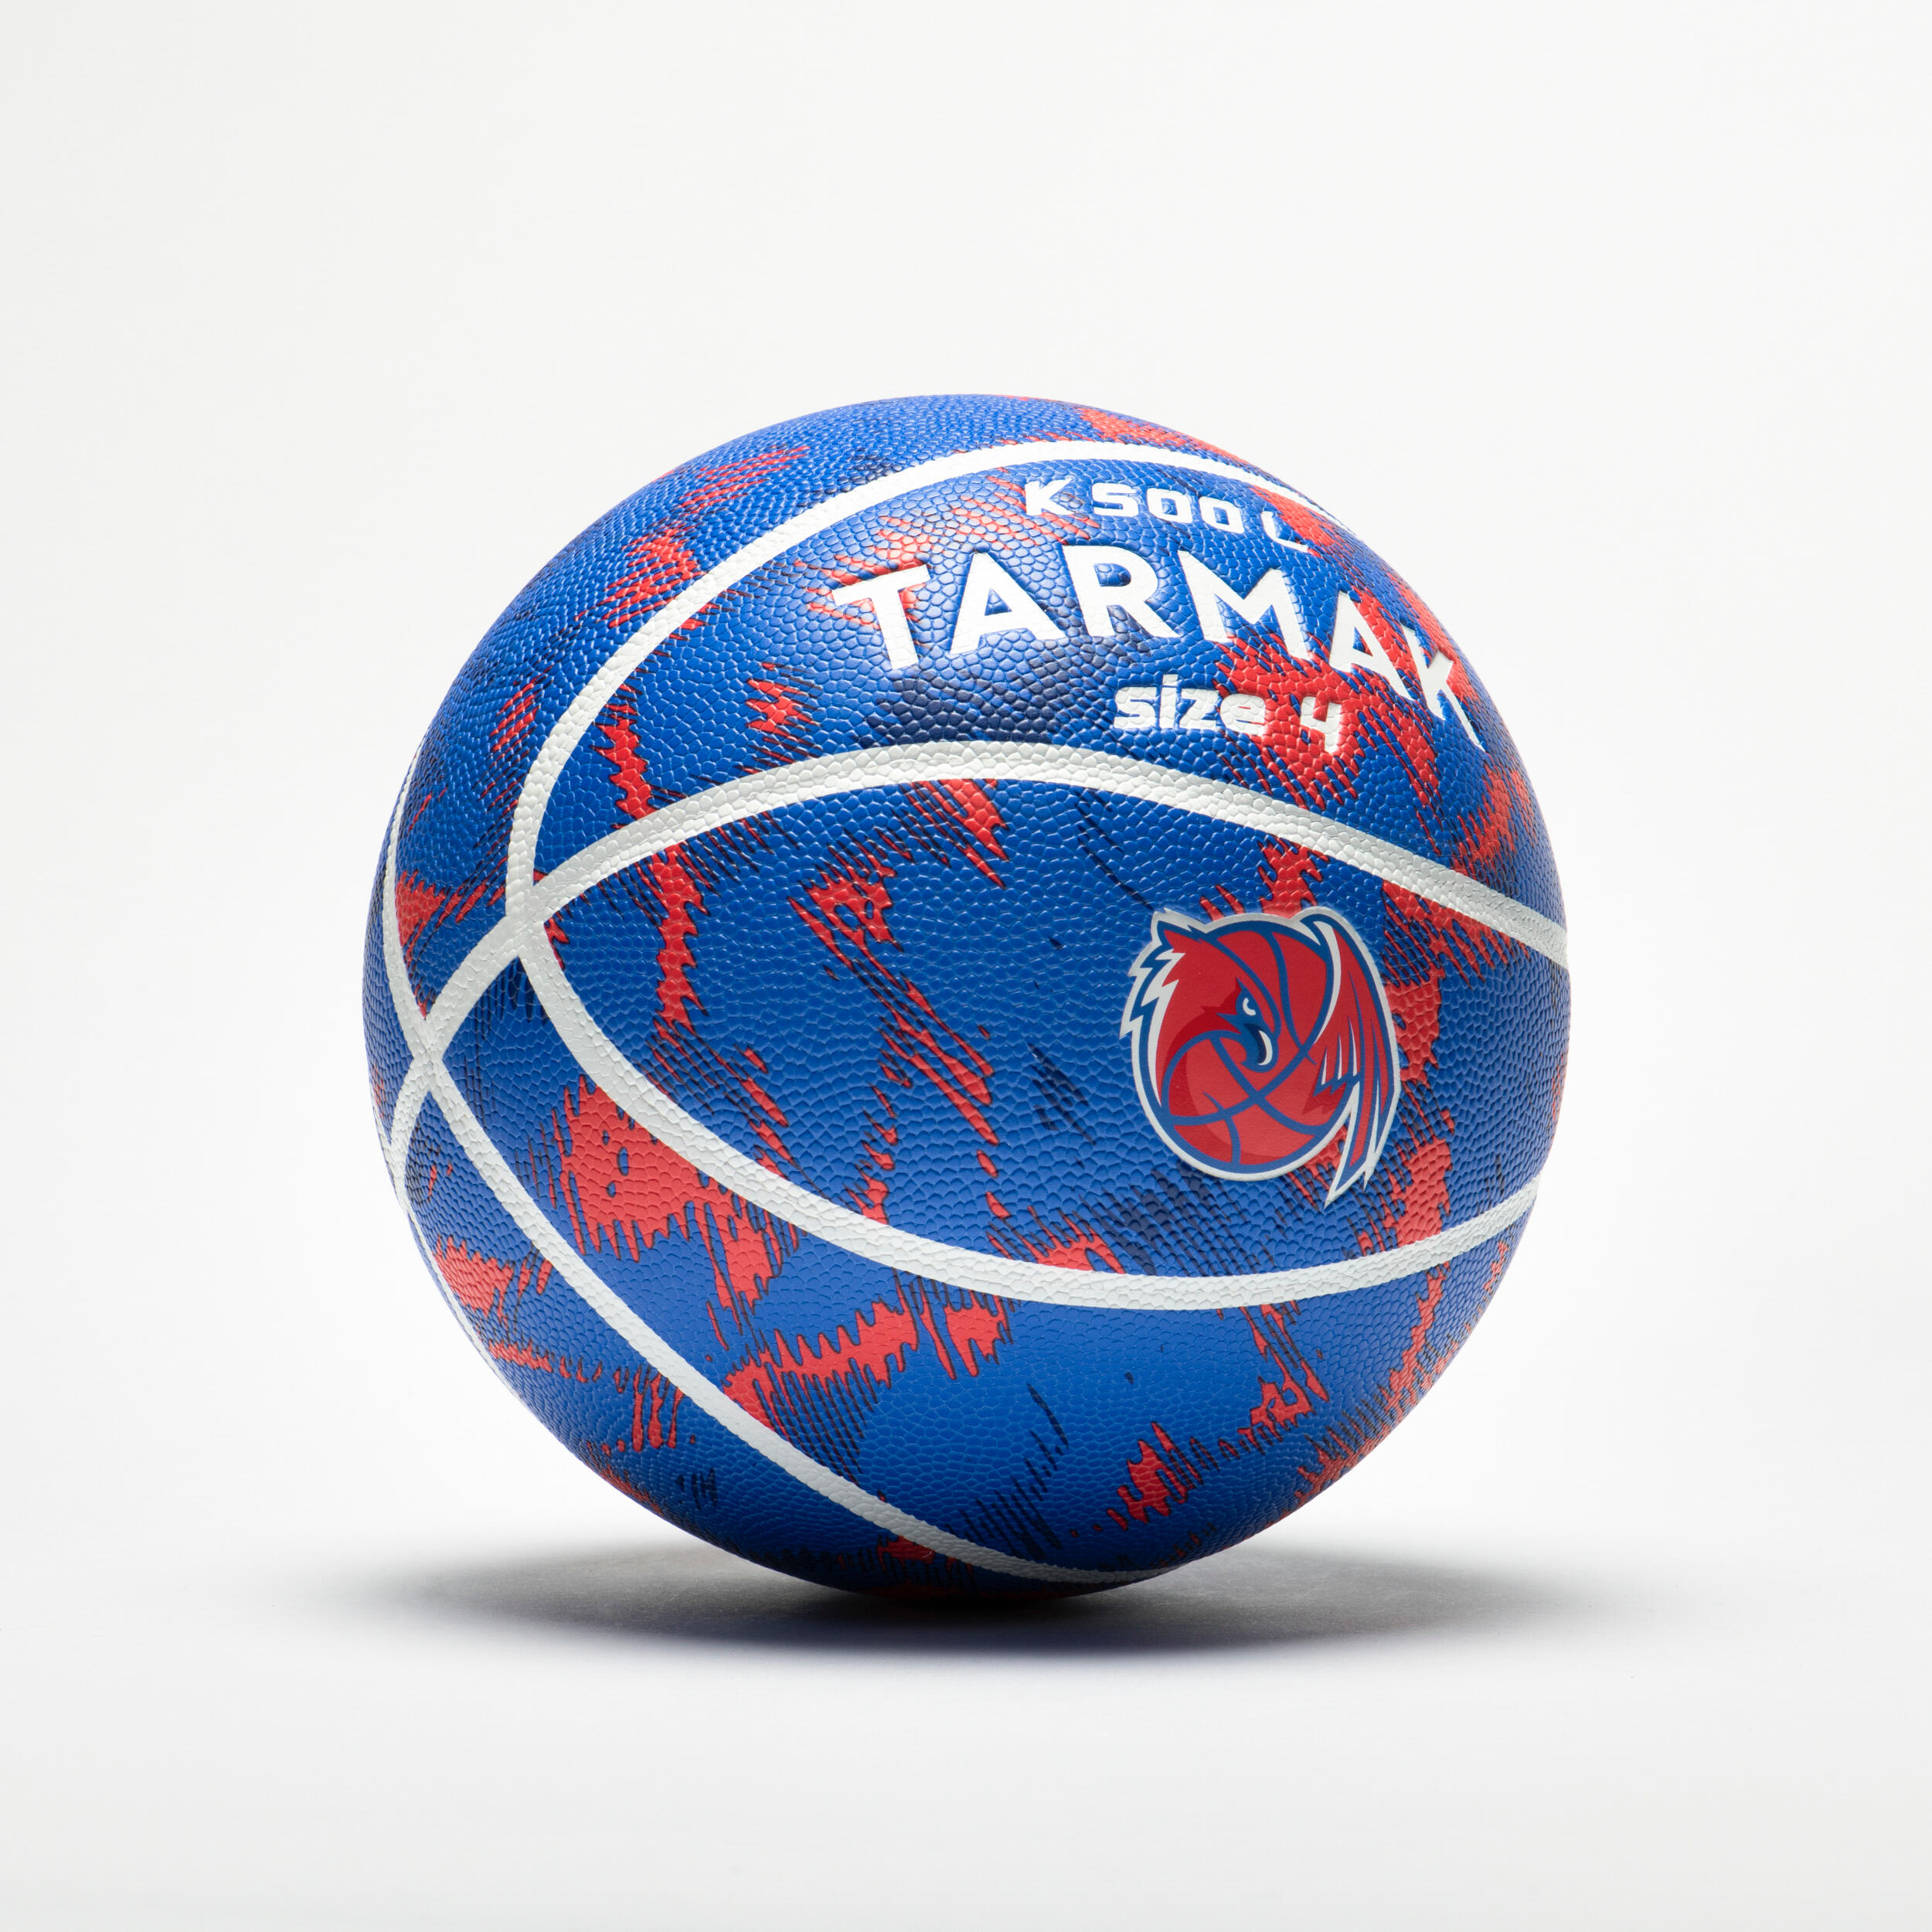 Kids' Size 4 Basketball - K 500 Blue/Red - TARMAK